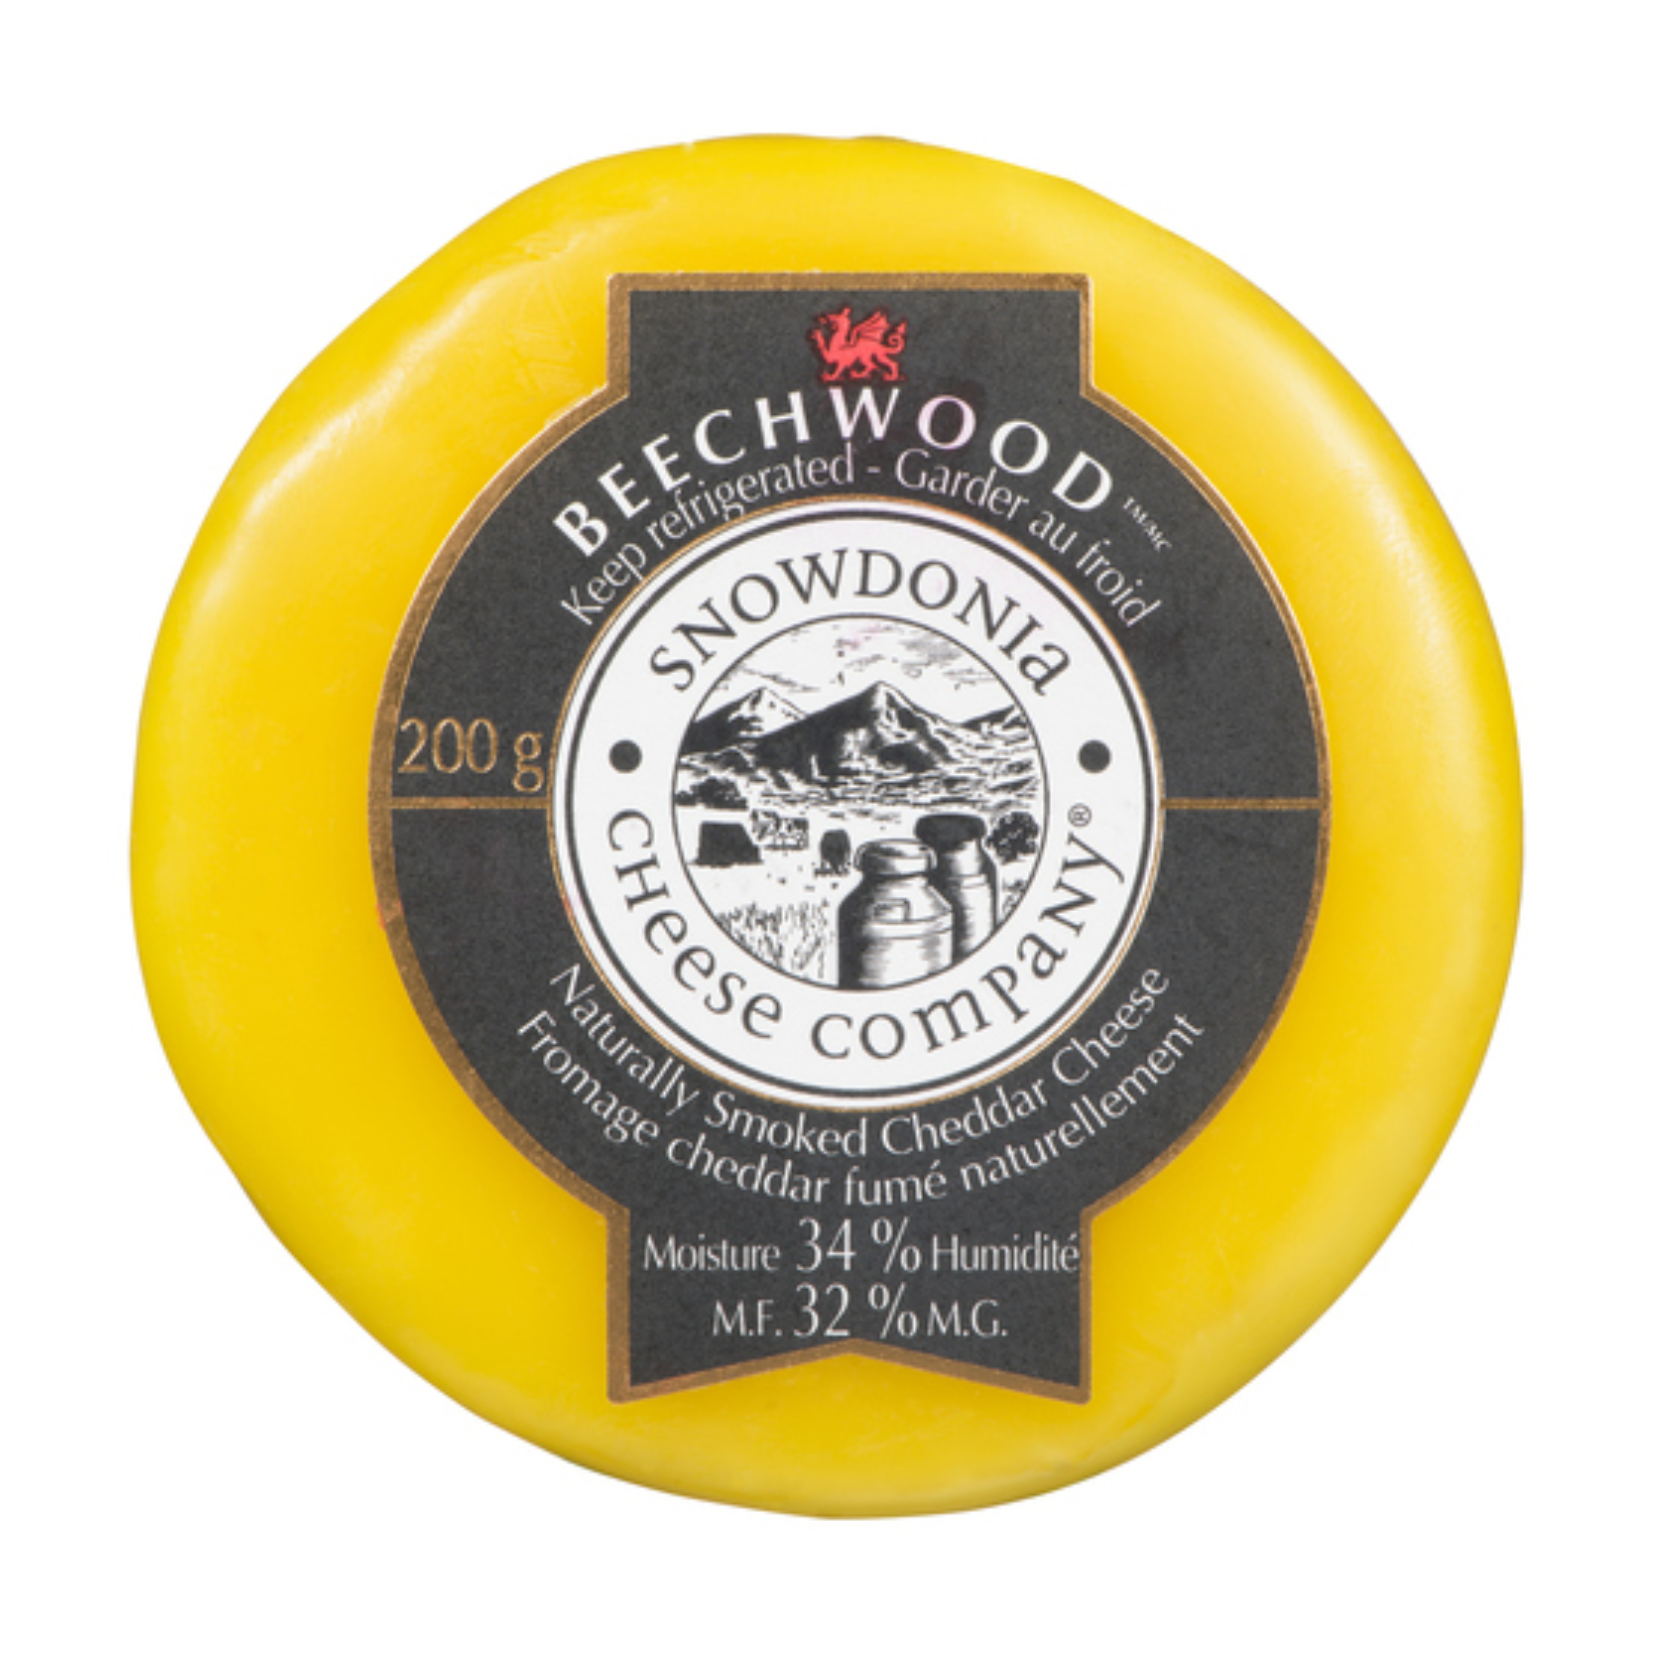 Snowdonia Beechwood Smoked Cheddar Cheese 200g